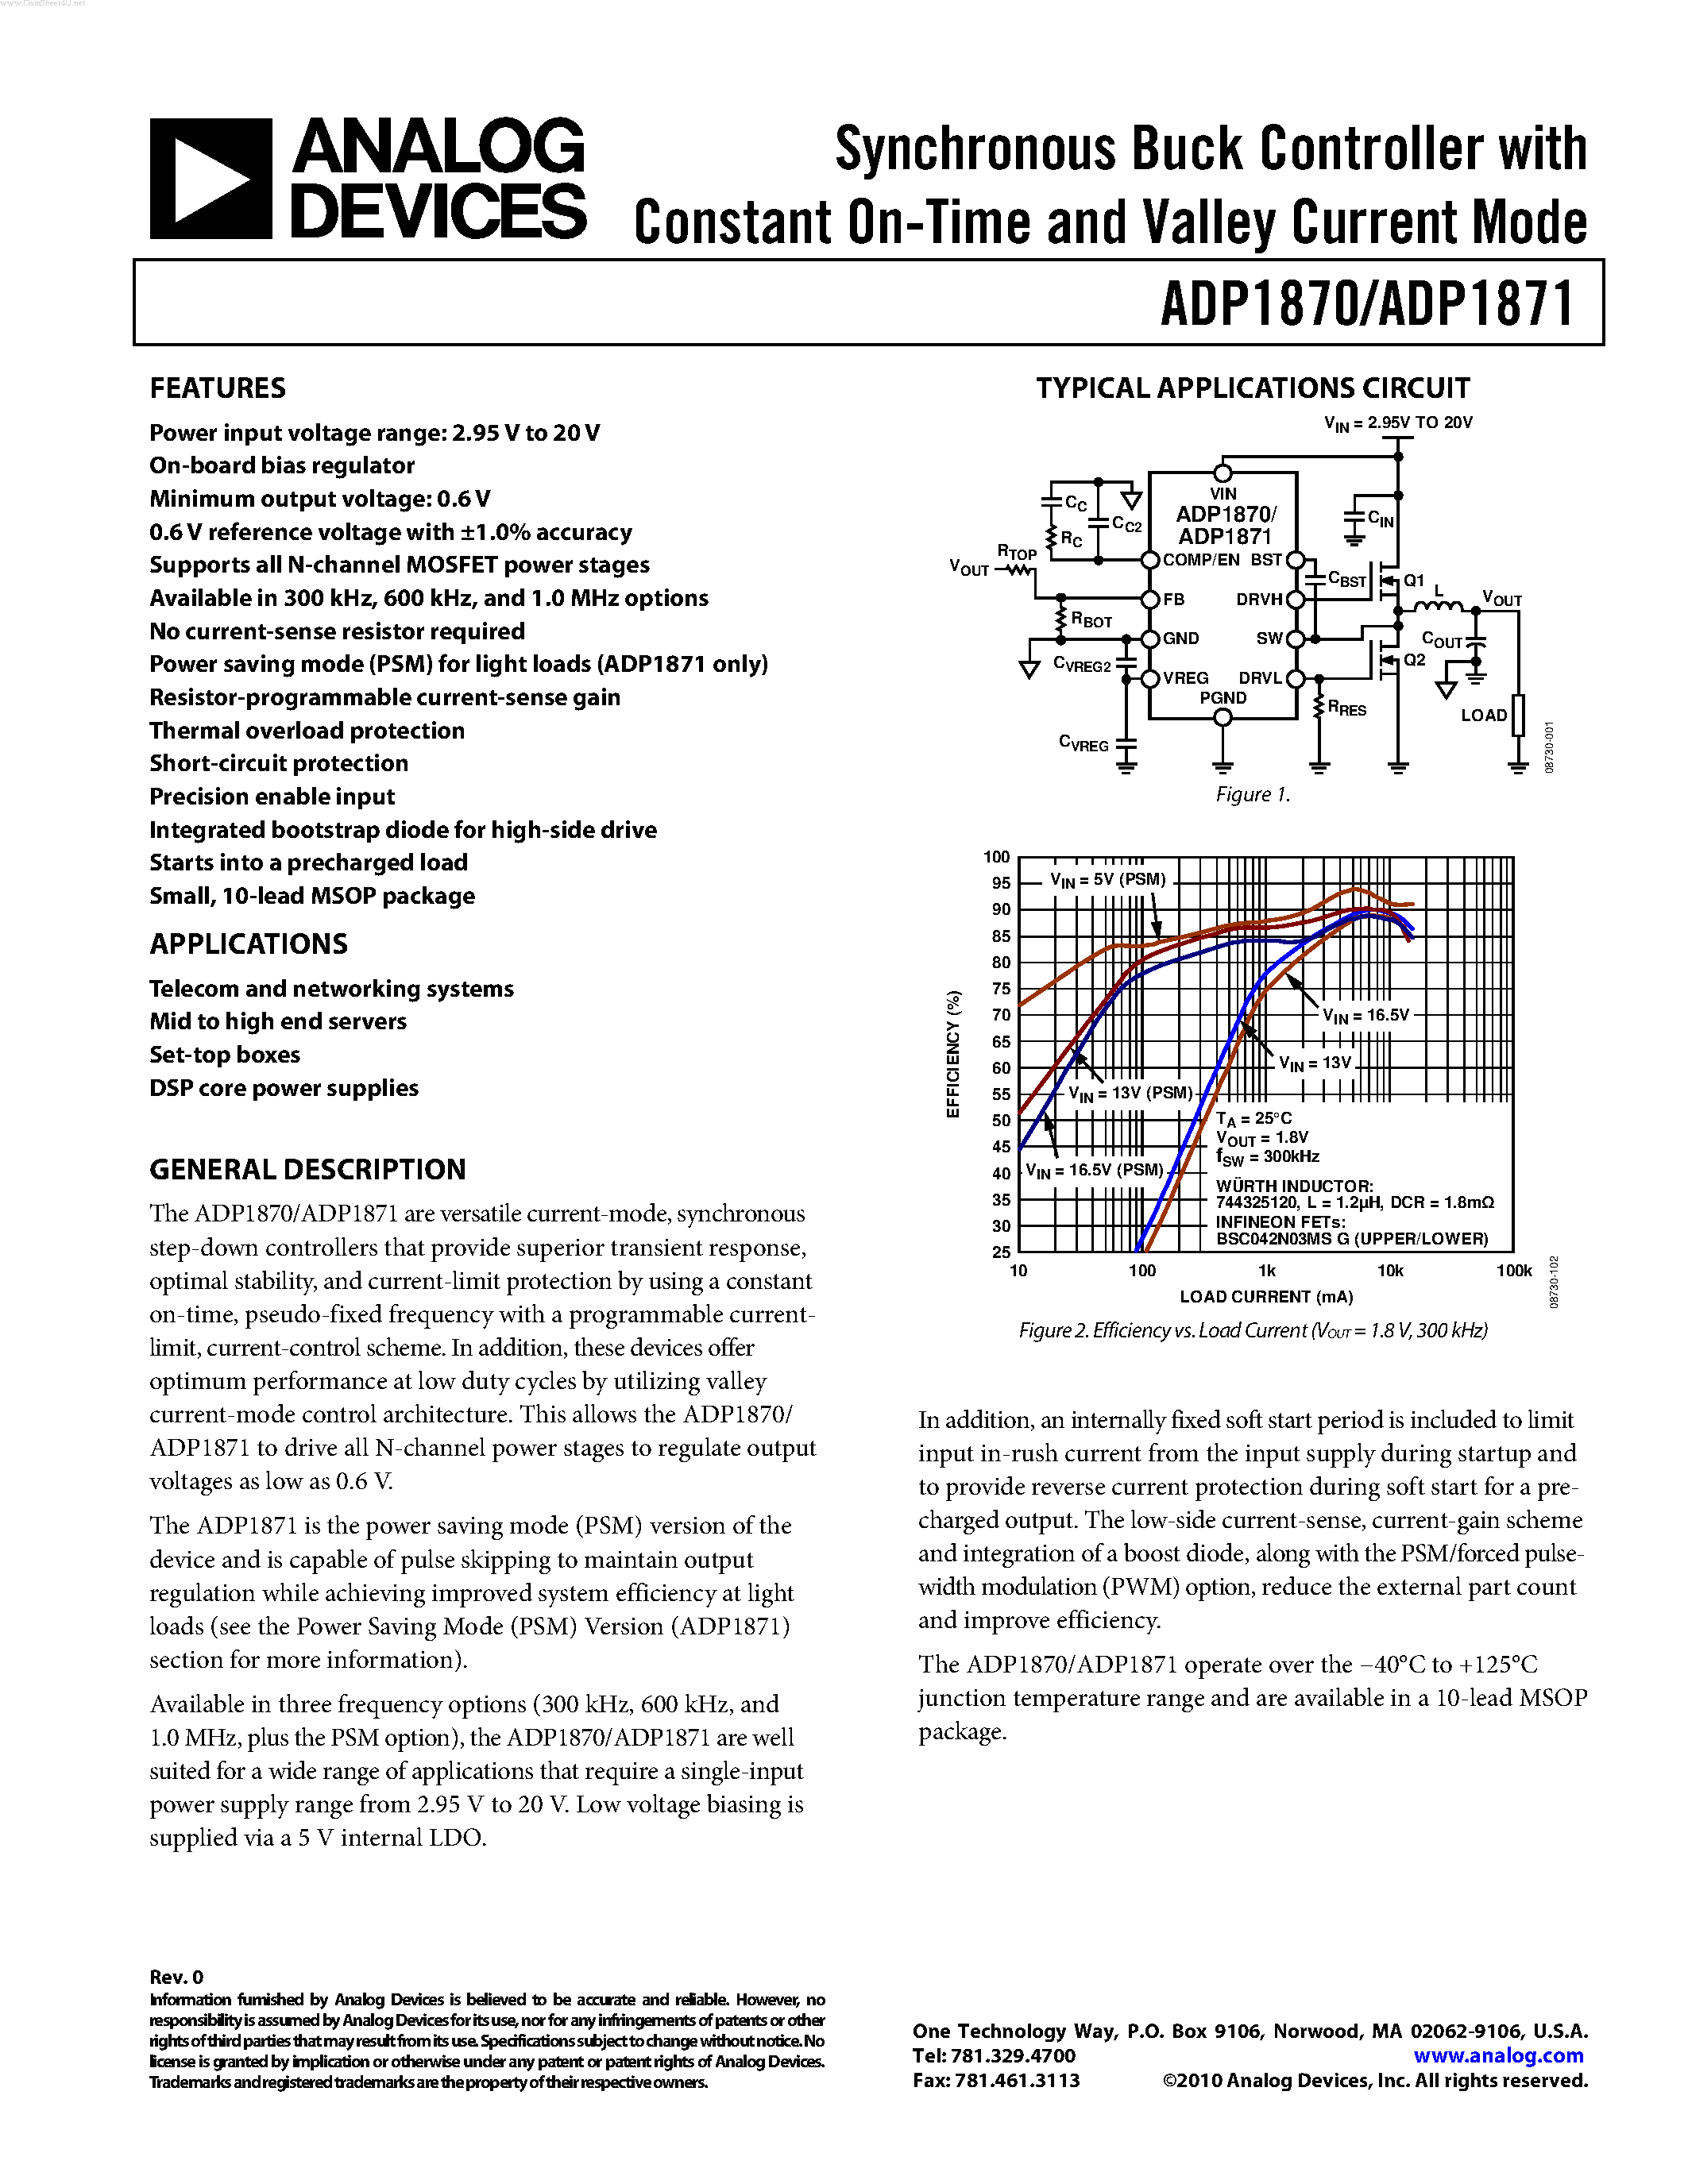 Даташит ADP1870 - (ADP1870 / ADP1871) Synchronous Buck Controller страница 1